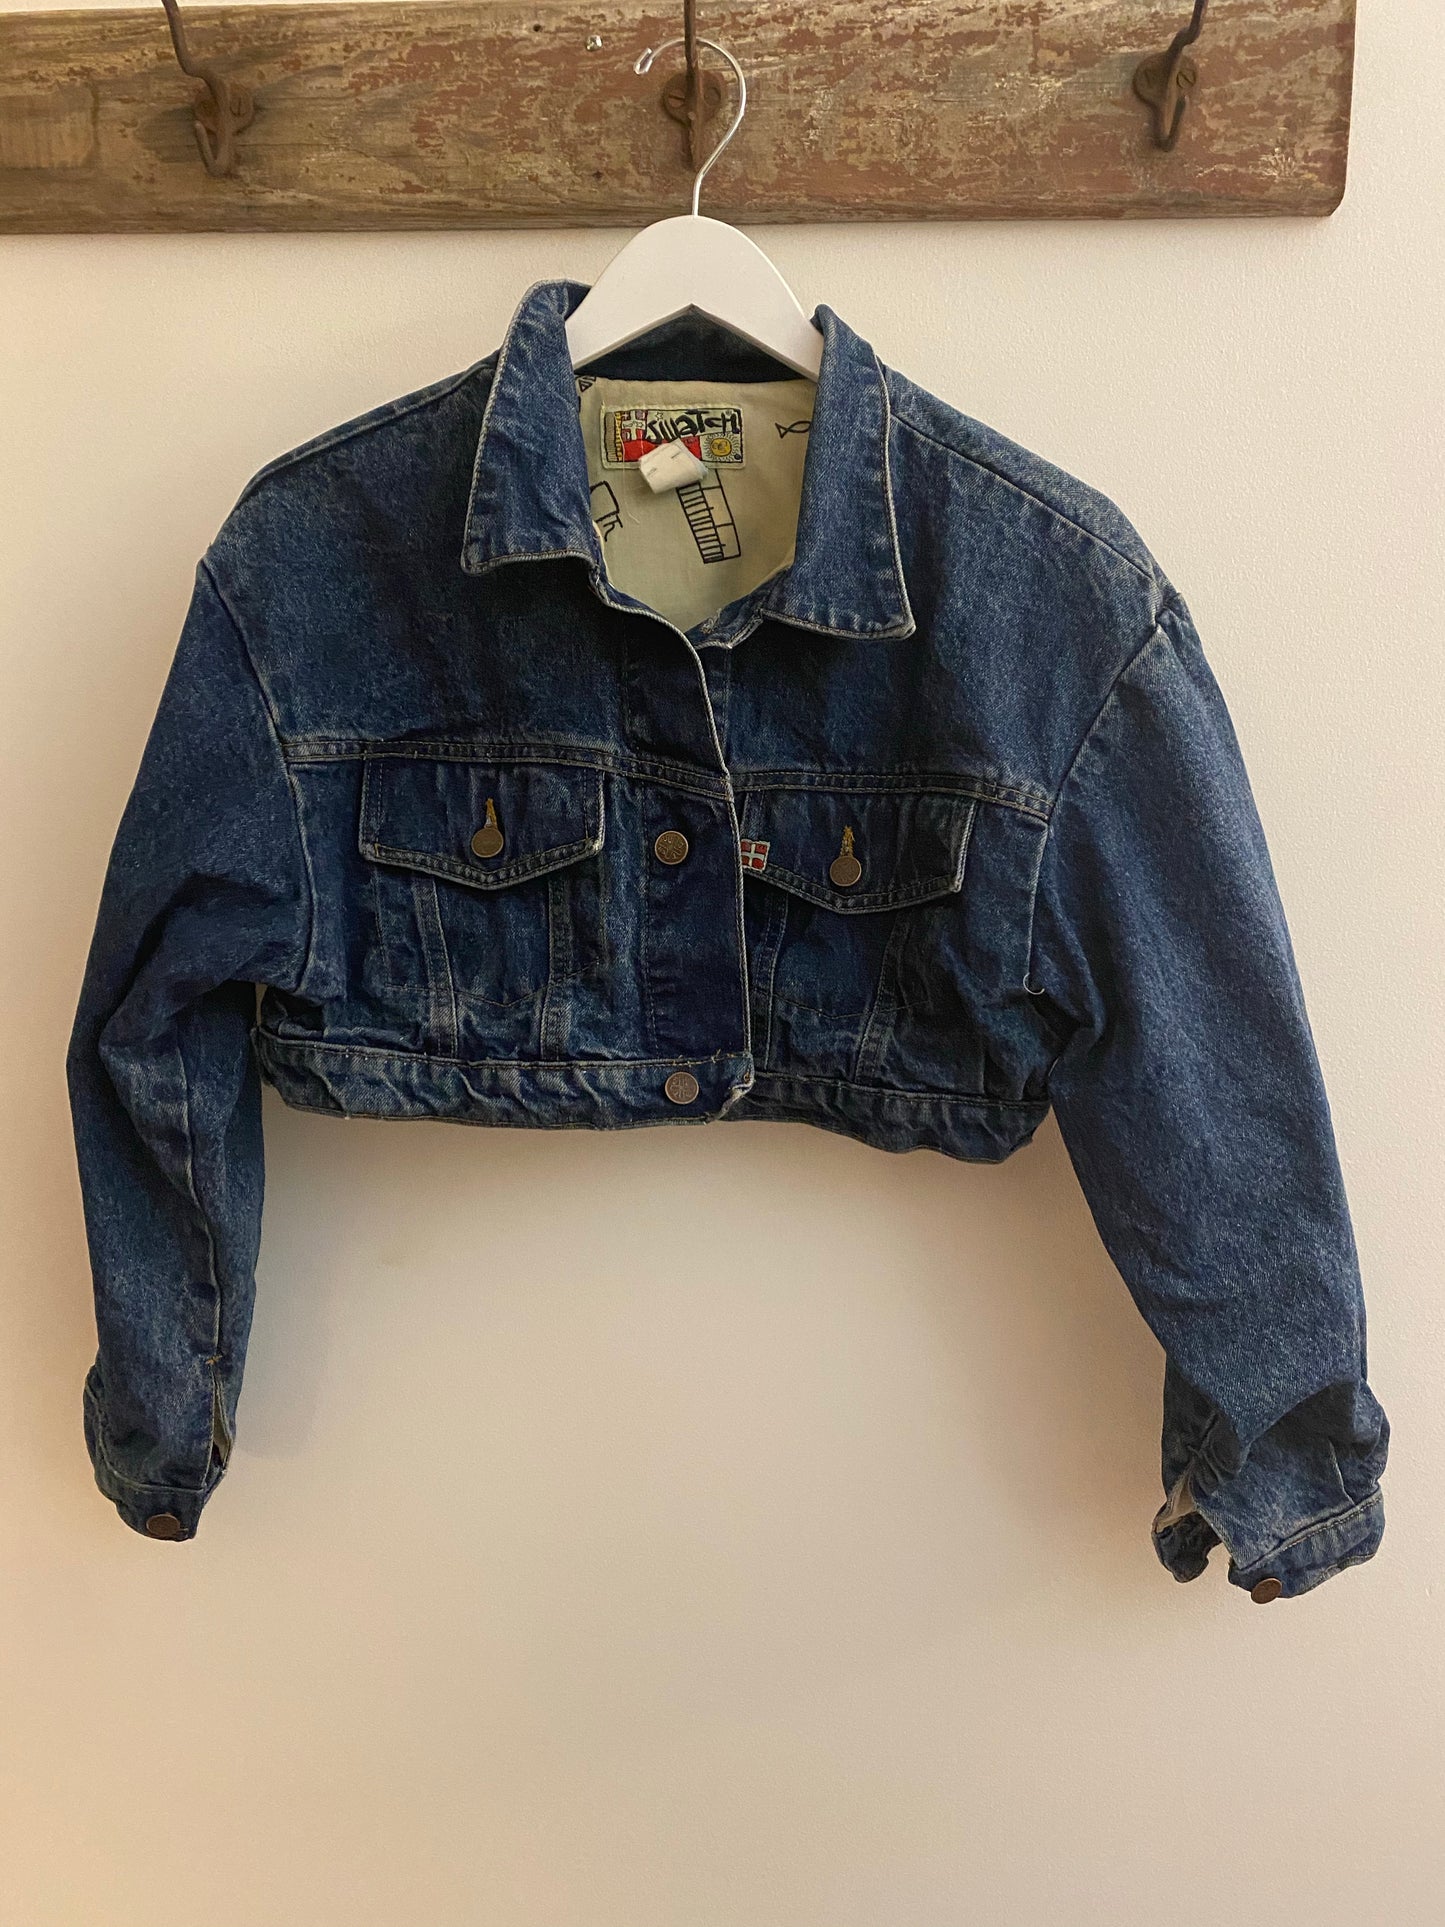 90’s cropped jacket